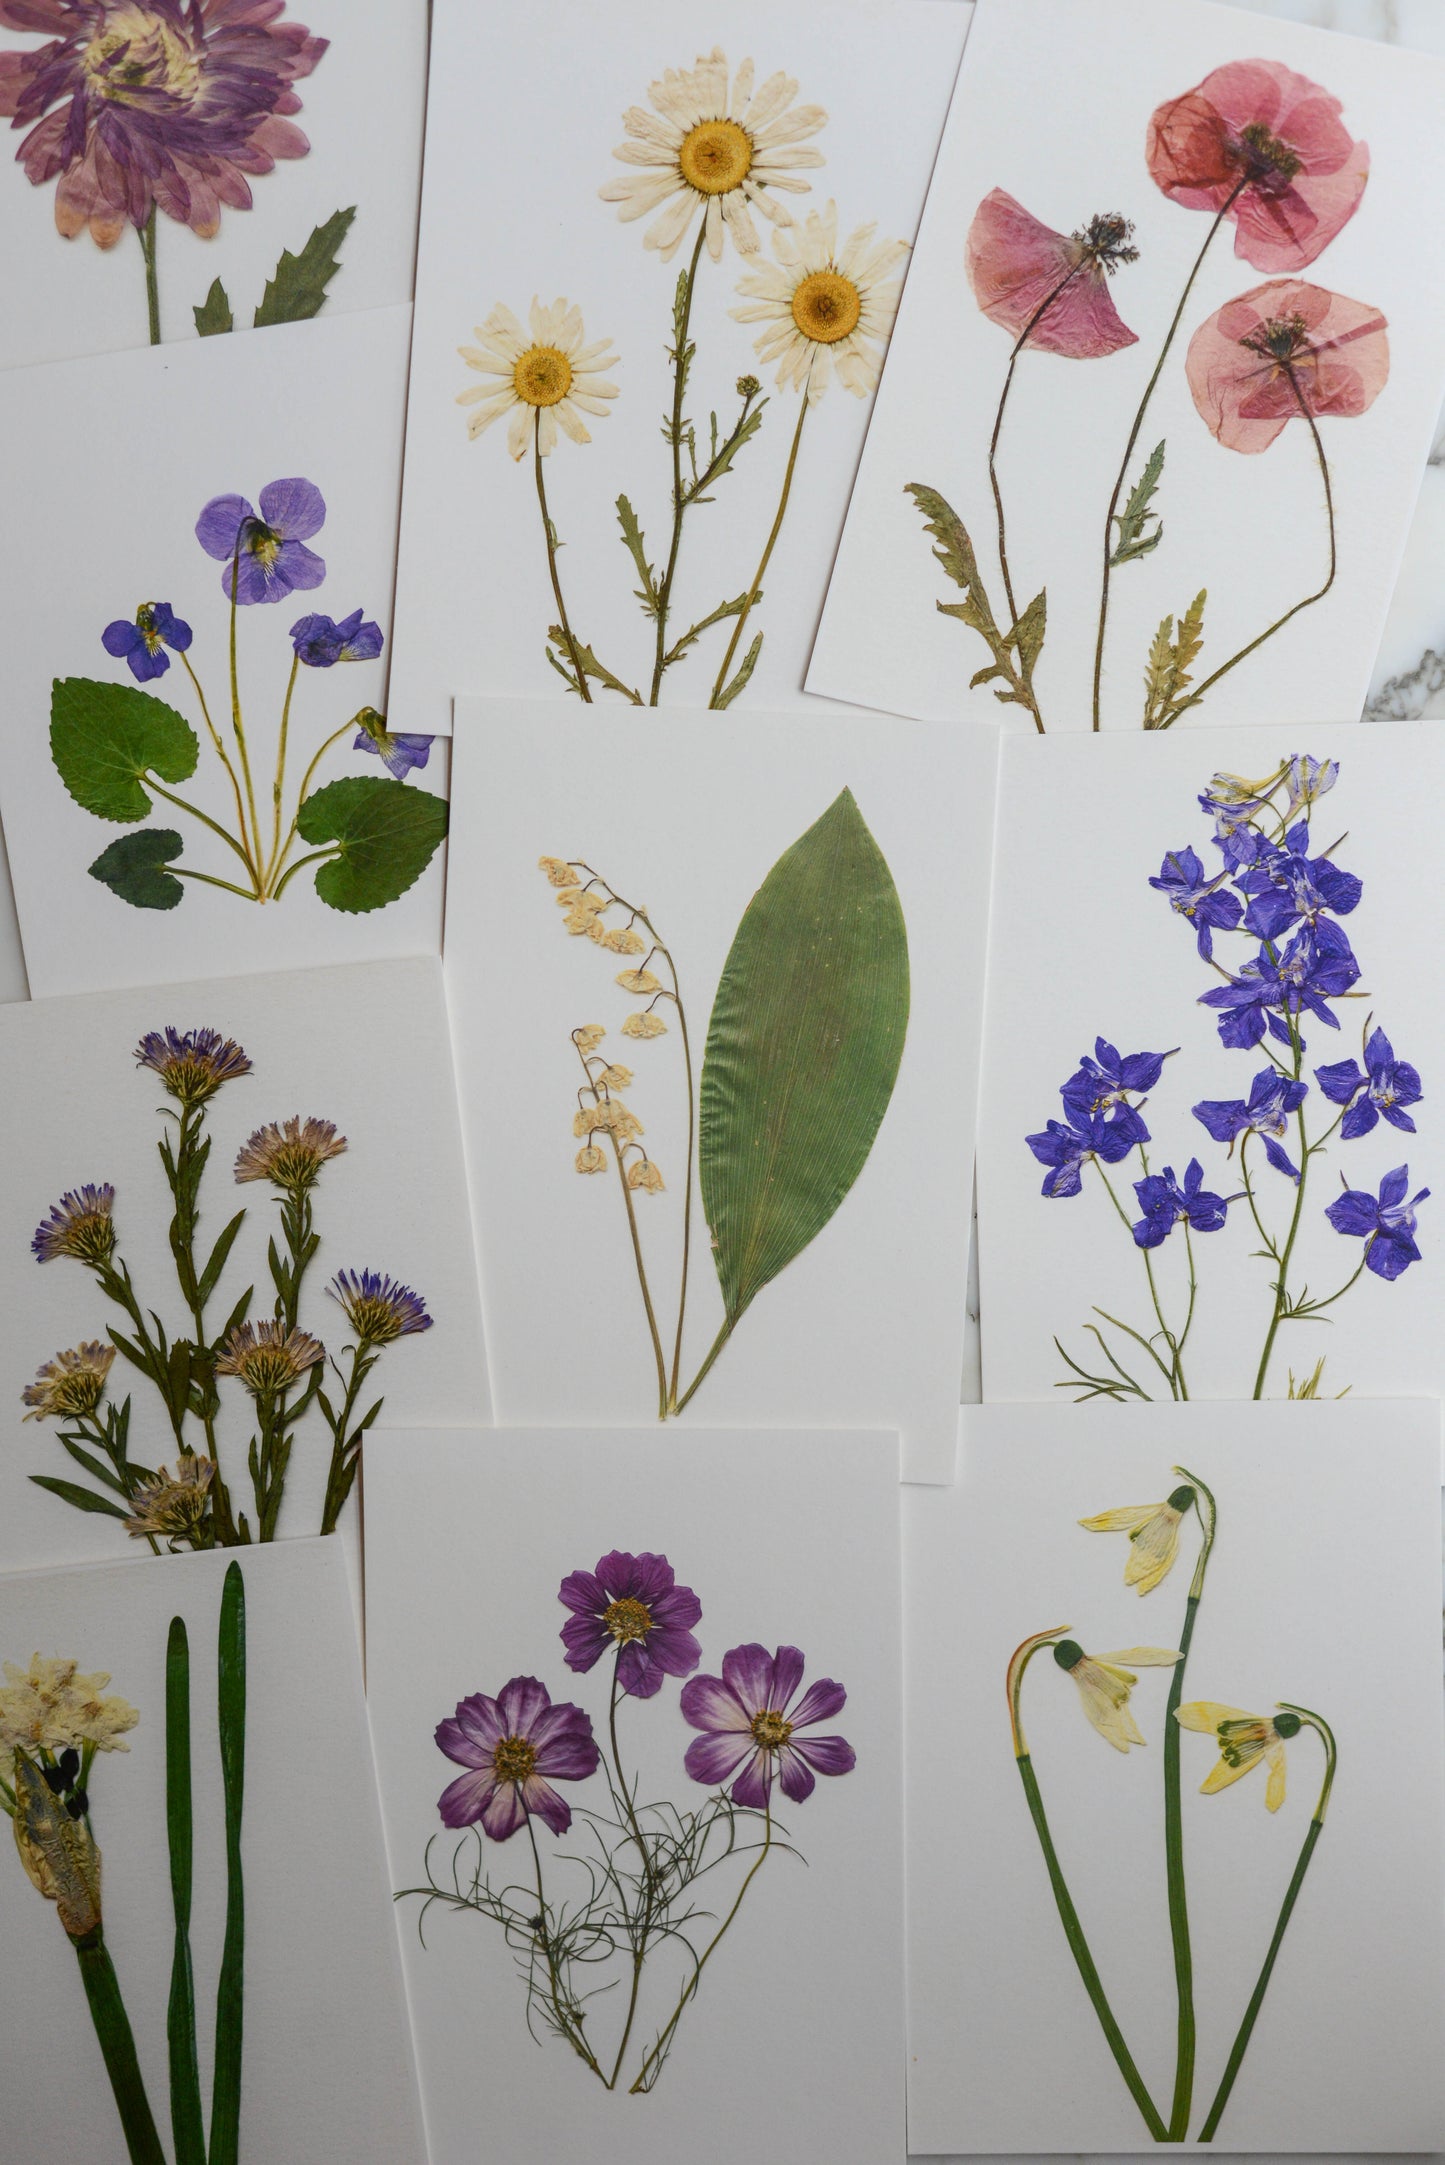 Birth Flowers - Art Print of Pressed Flowers